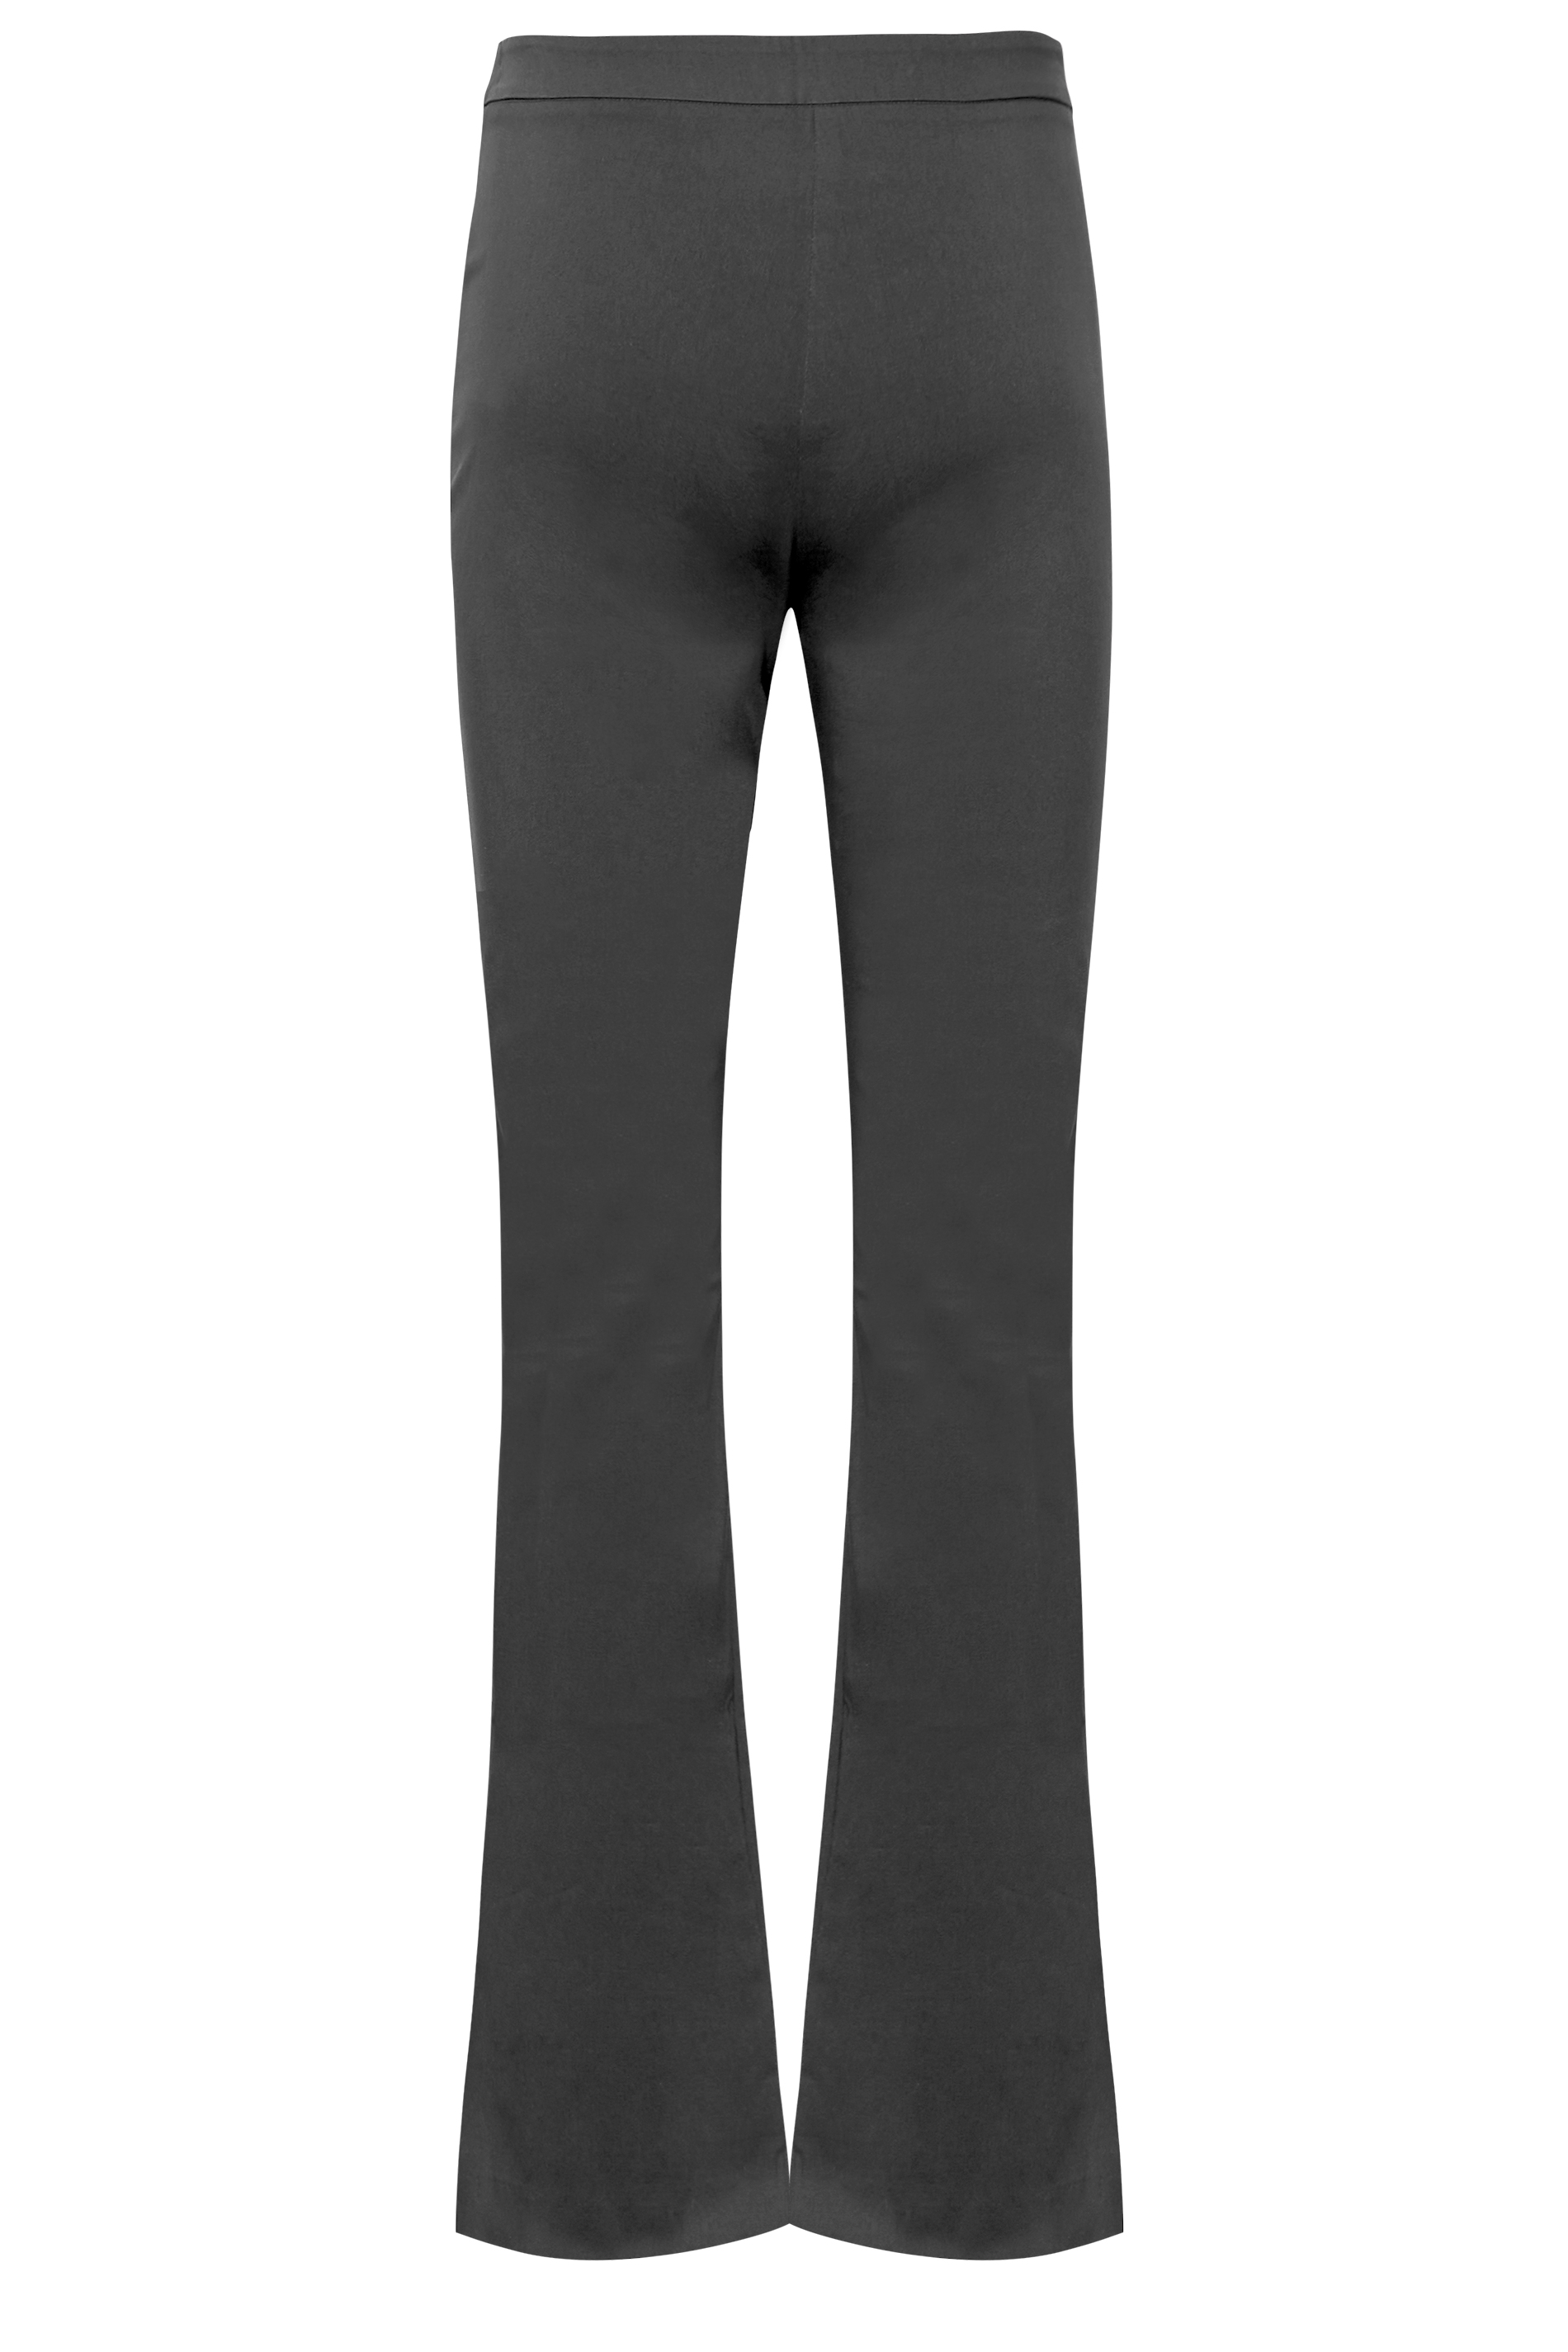 LTS Tall Women's Grey Bi Stretch Bootcut Trousers | Long Tall Sally